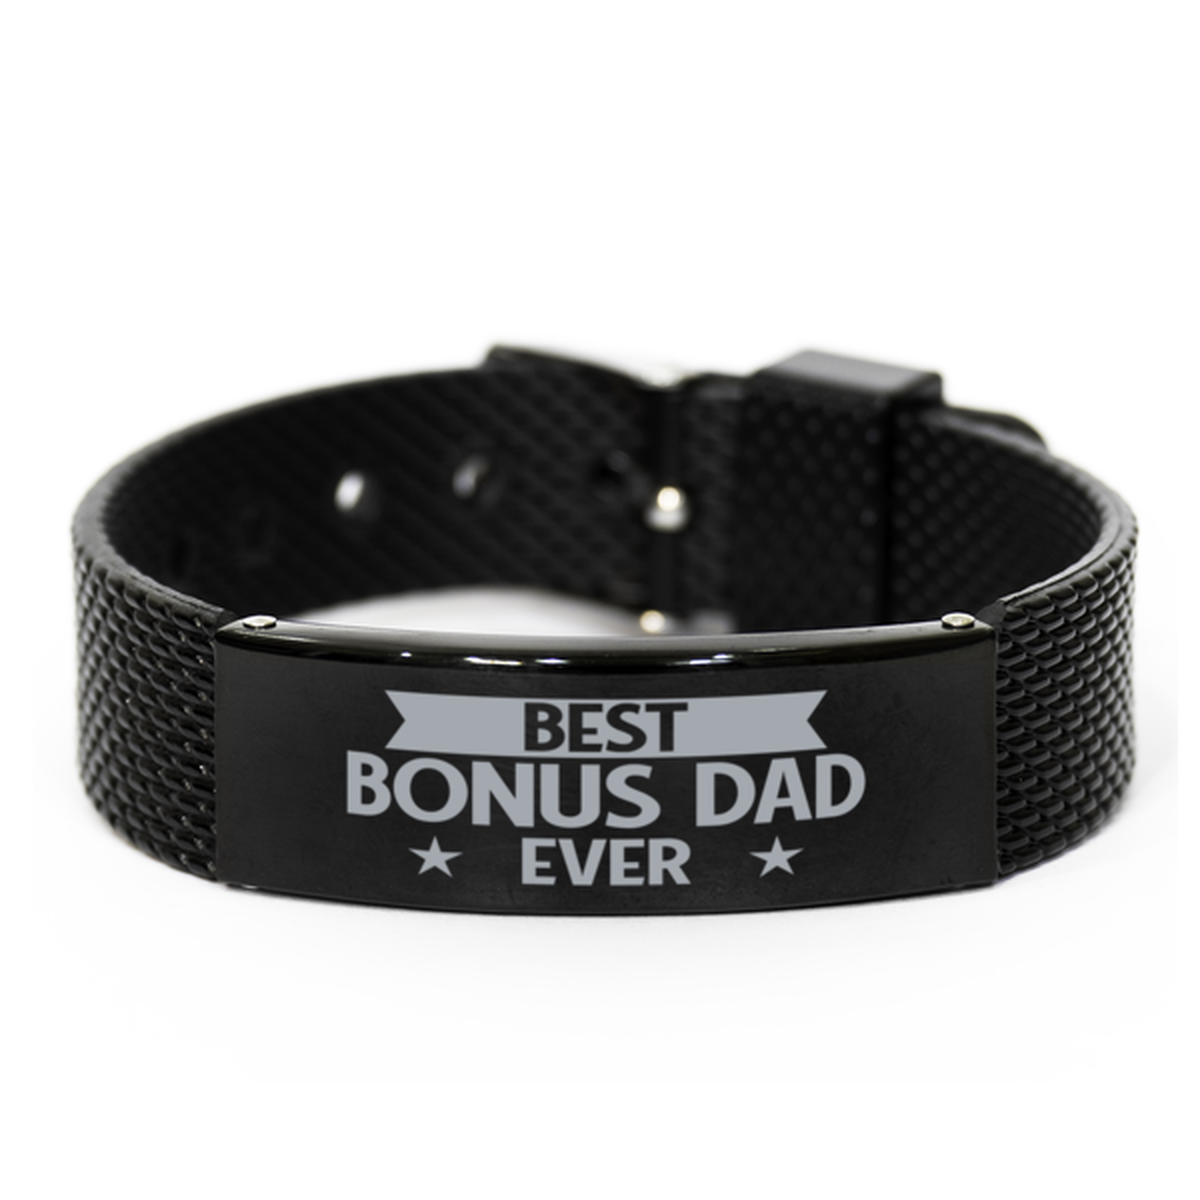 Best Bonus Dad Ever Bonus Dad Gifts, Gag Engraved Bracelet For Bonus Dad, Best Family Gifts For Men